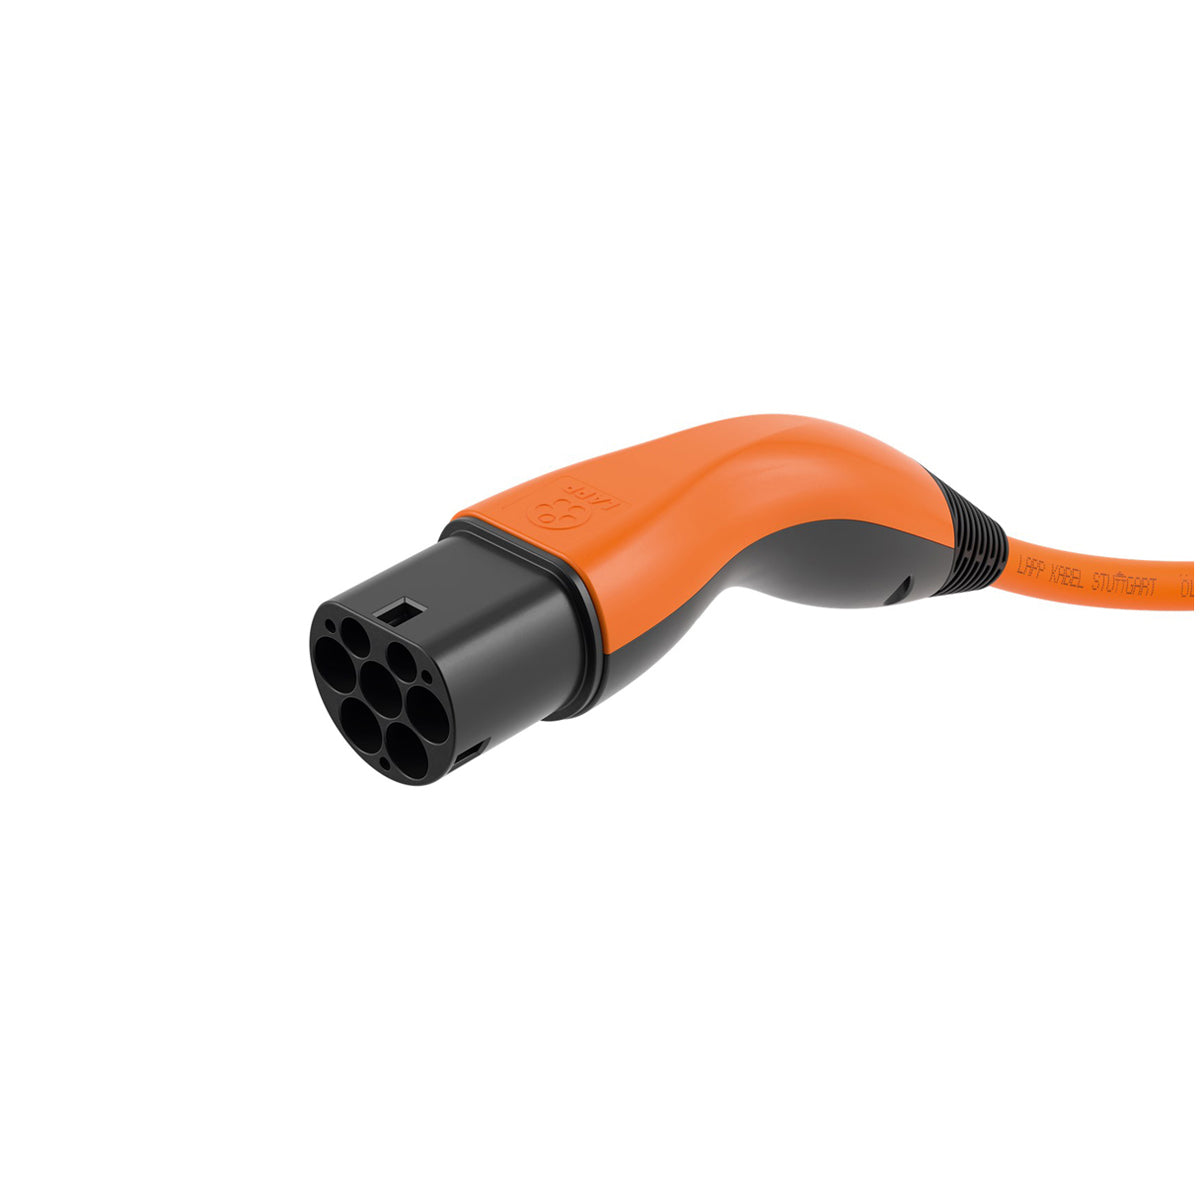 LAPP EV Charge Cable Type 2 (7.4kW-1P-32A) 5m - Orange.